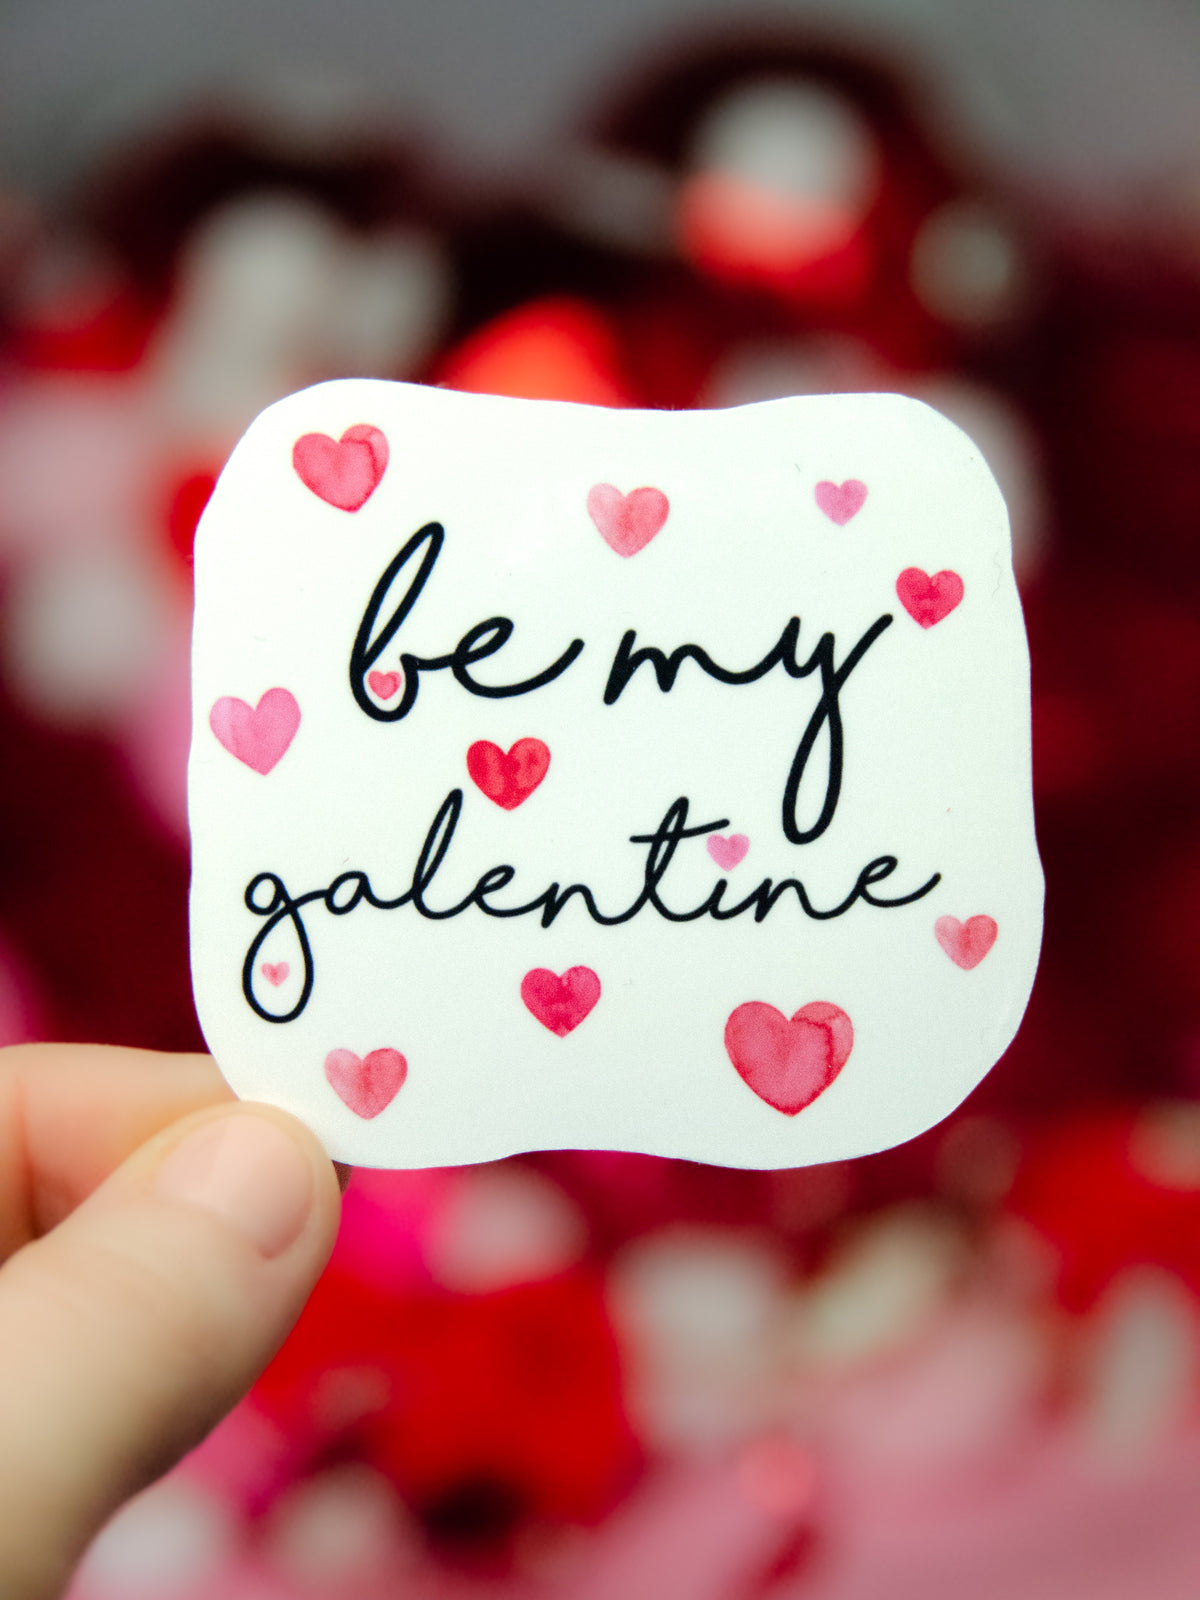 be my galentine hearts sticker